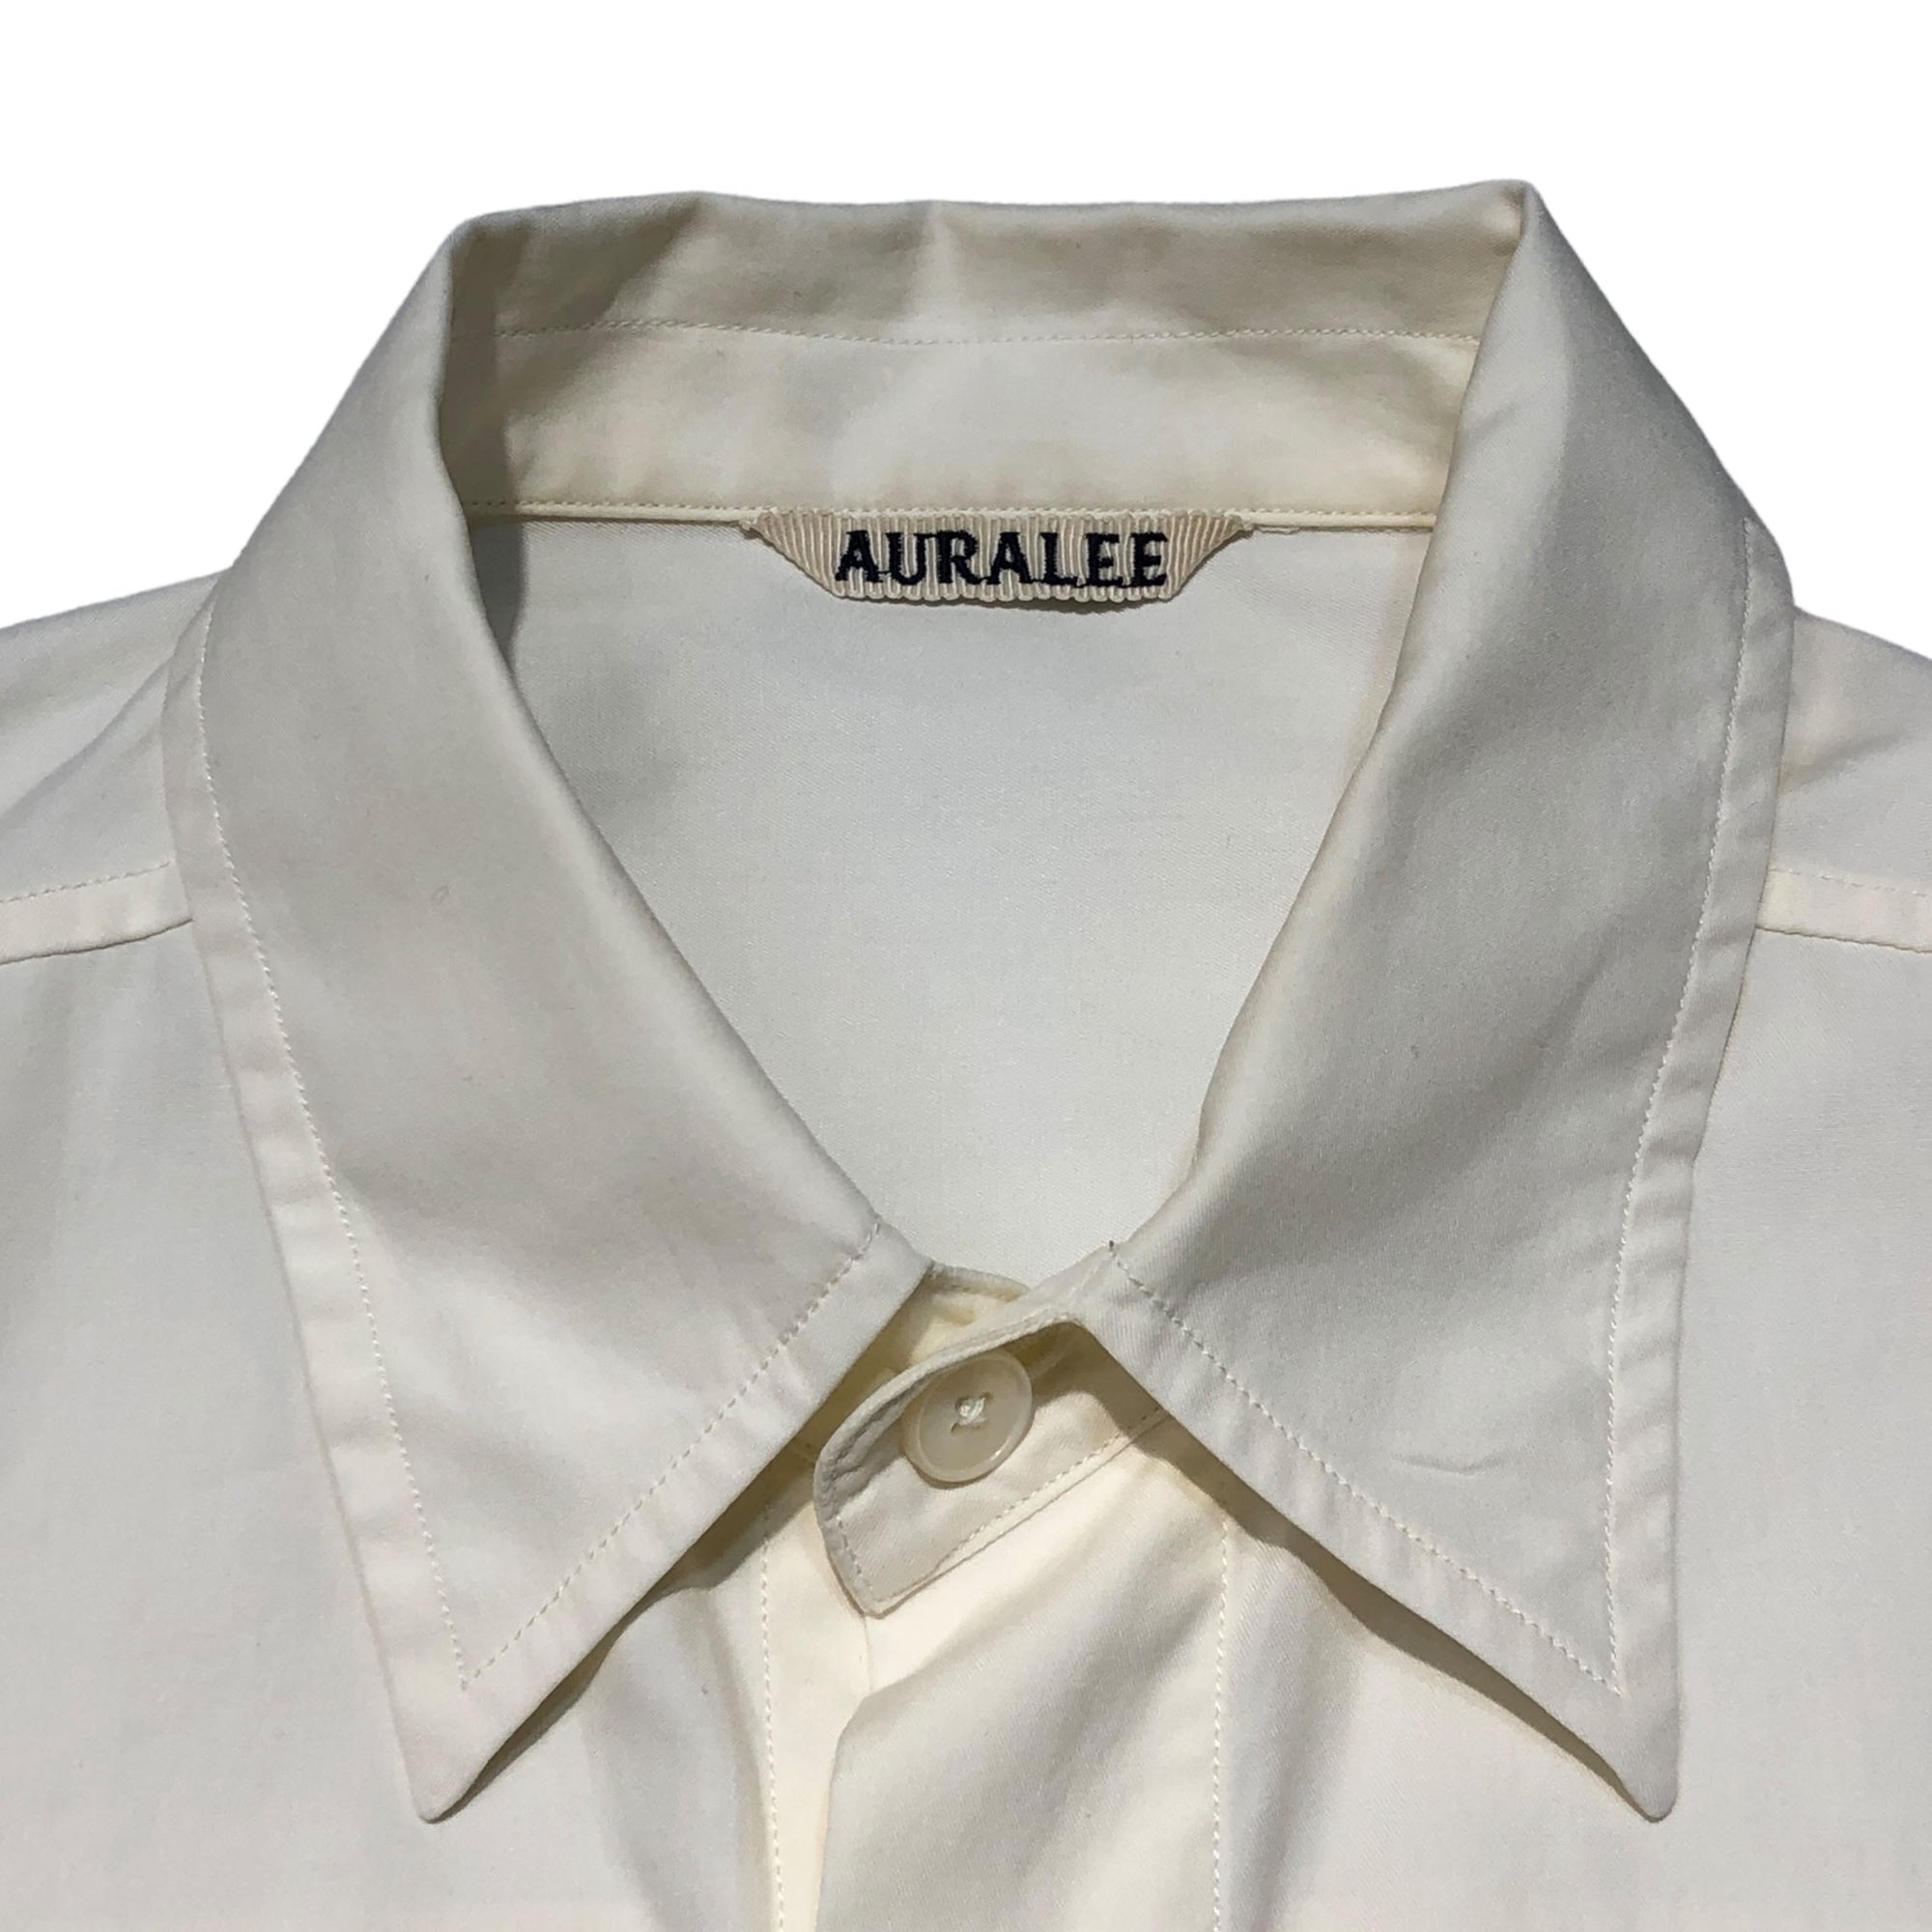 AURALEE(オーラリー) 21AW WASHED FINX TWILL BIG SHIRTS ウォッシュド フィンテック ツイル ビッグ シャツ AOOS03TN 3(L程度) クリーム(オフホワイト) オーバーサイズ 長袖